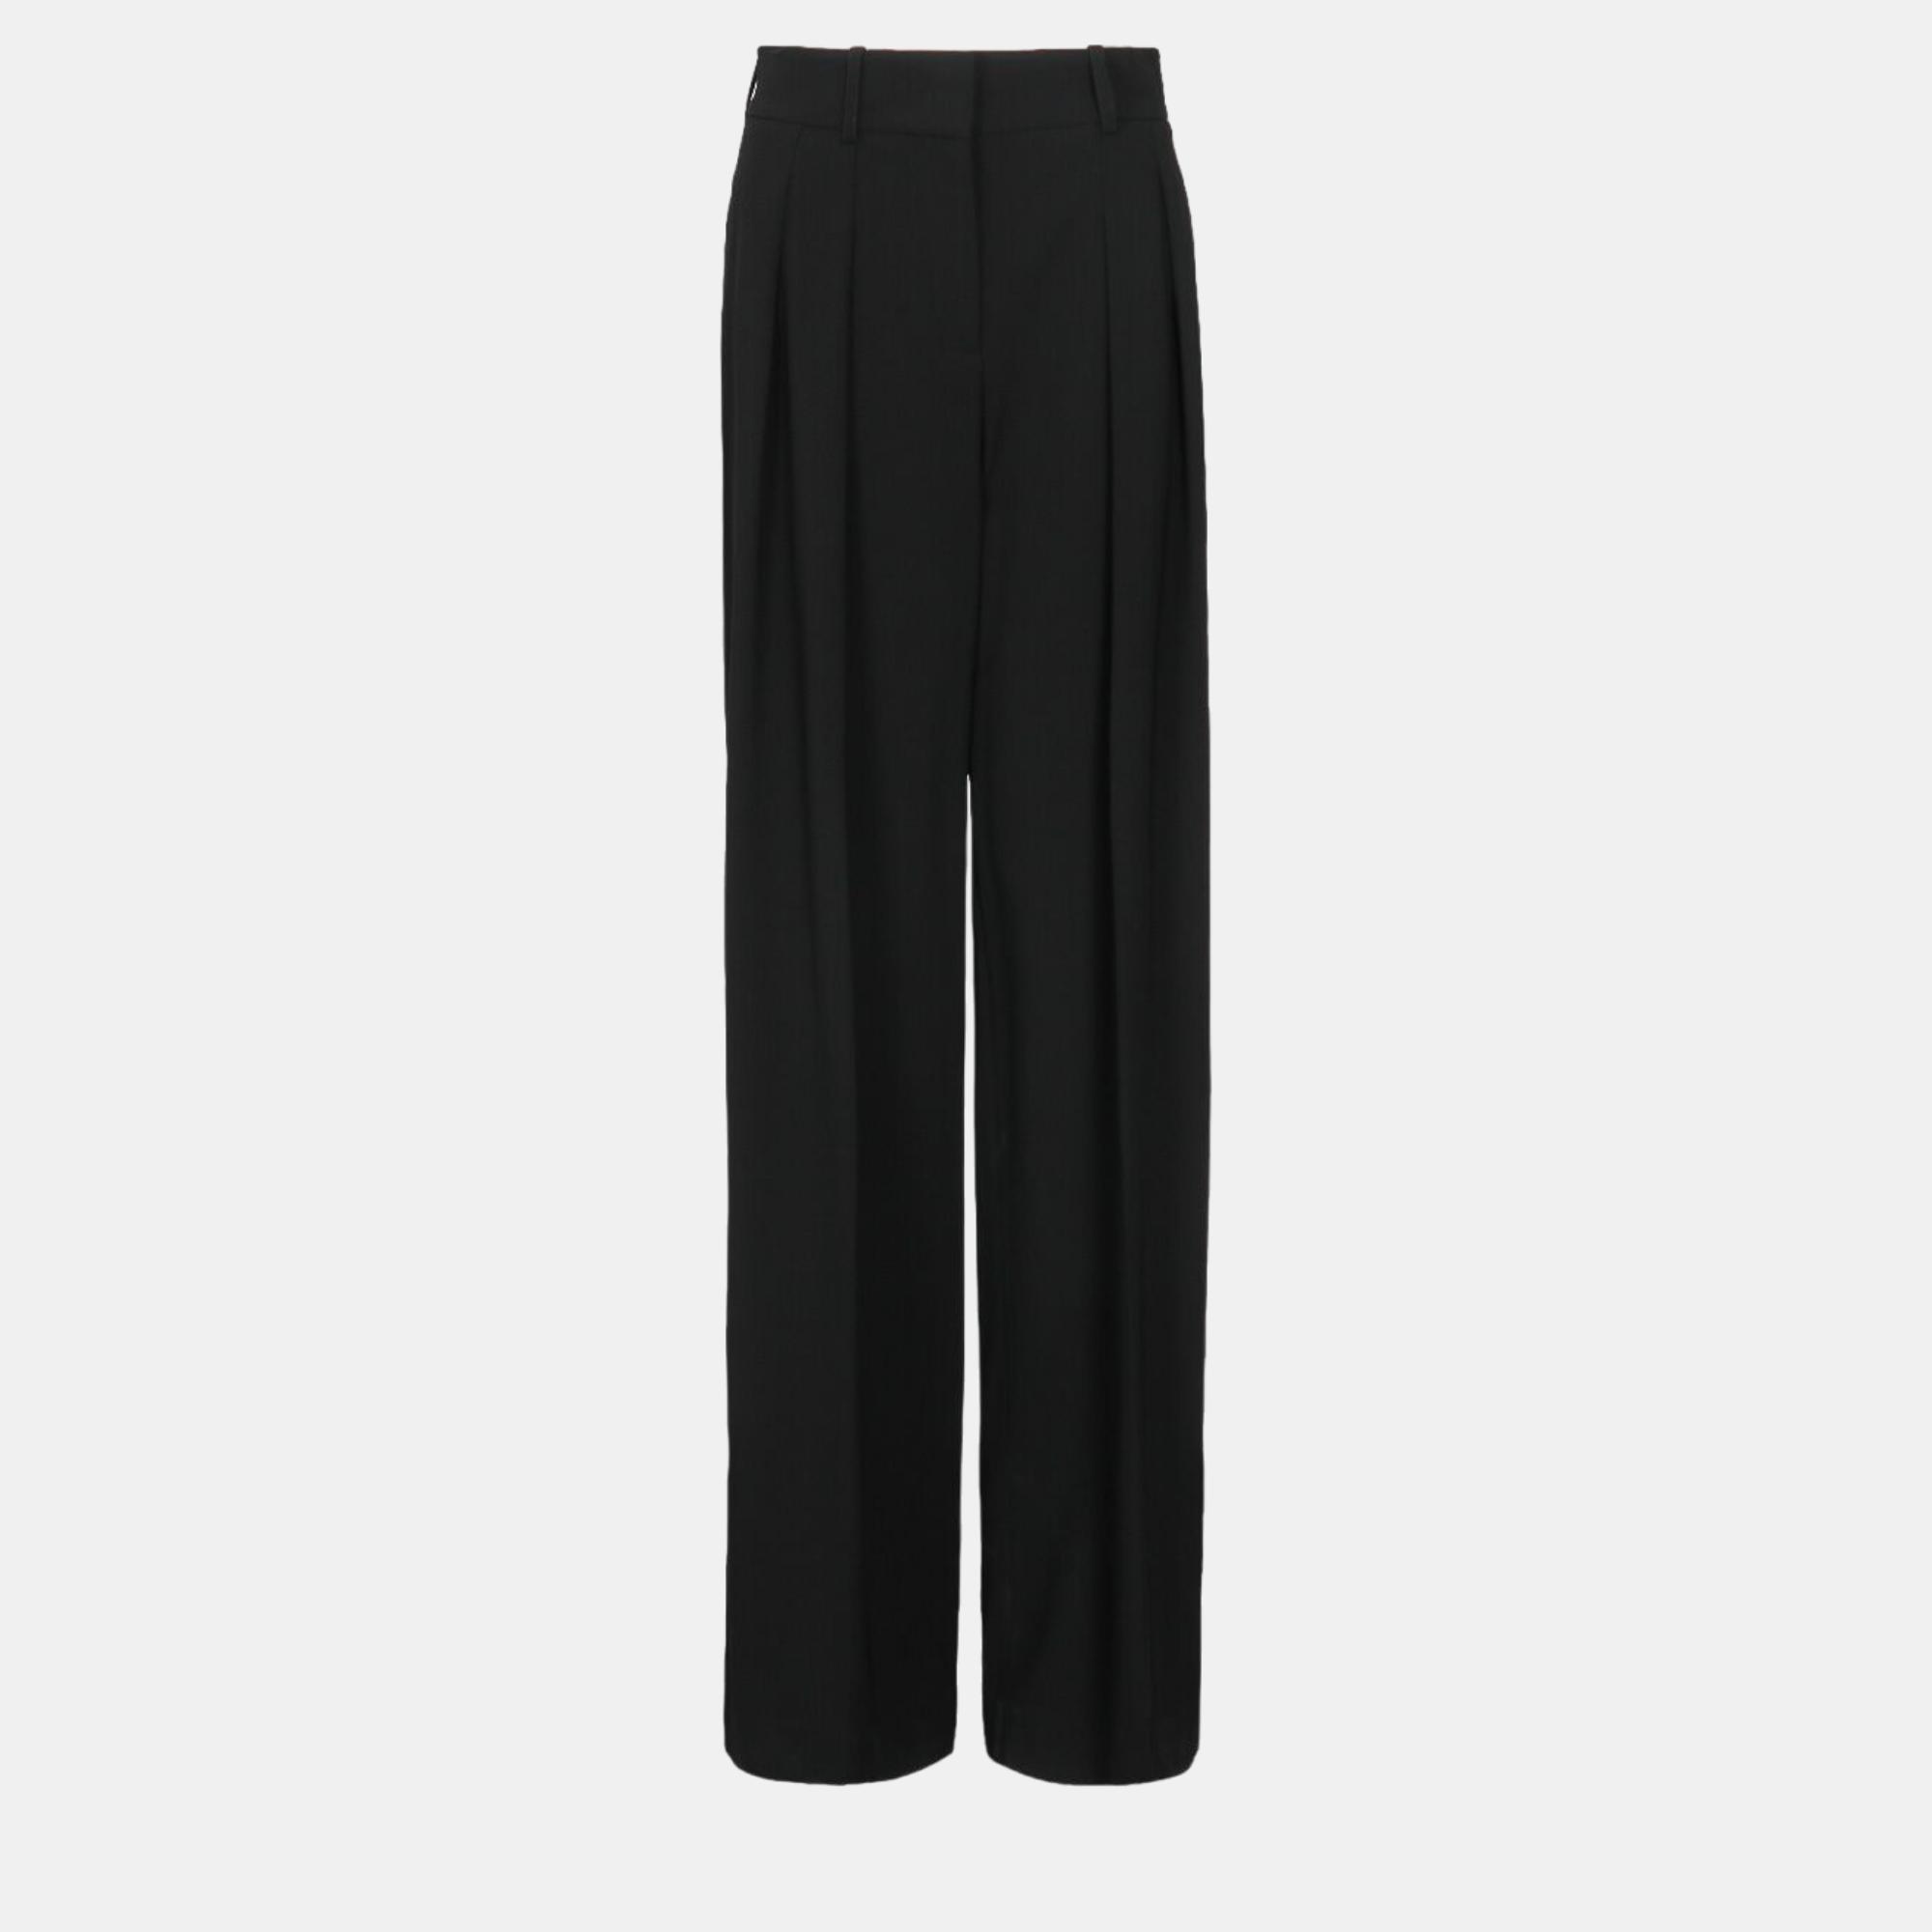 Michael kors black wide-leg slouch trousers xs/s